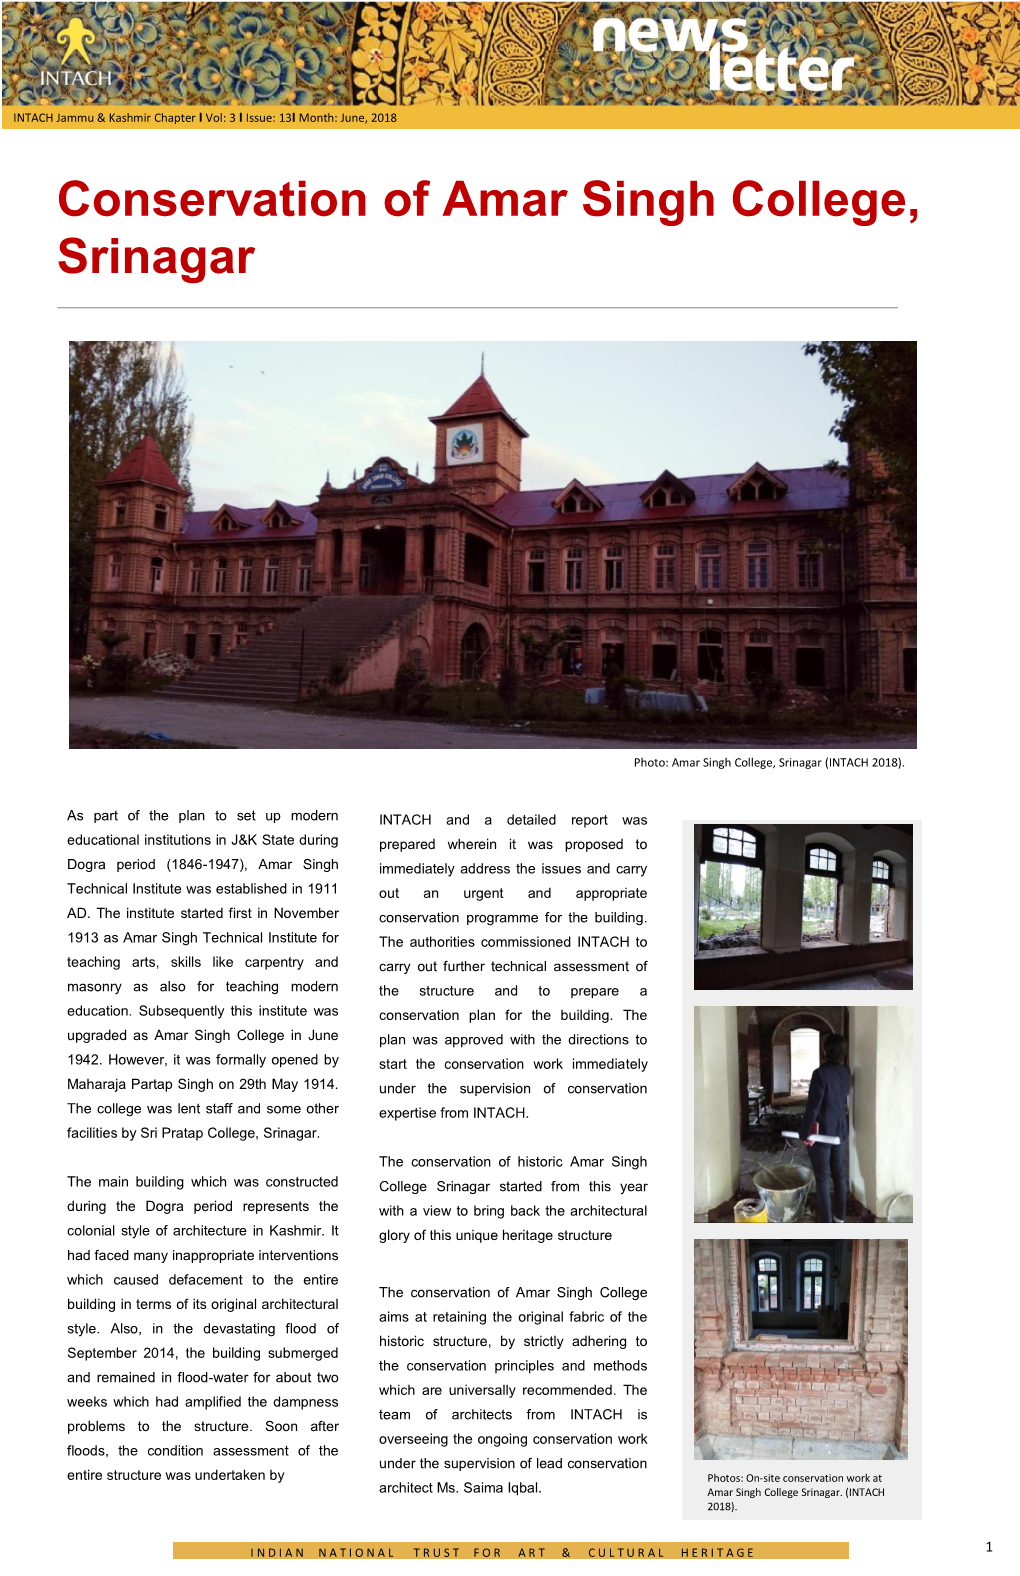 Conservation of Amar Singh College, Srinagar